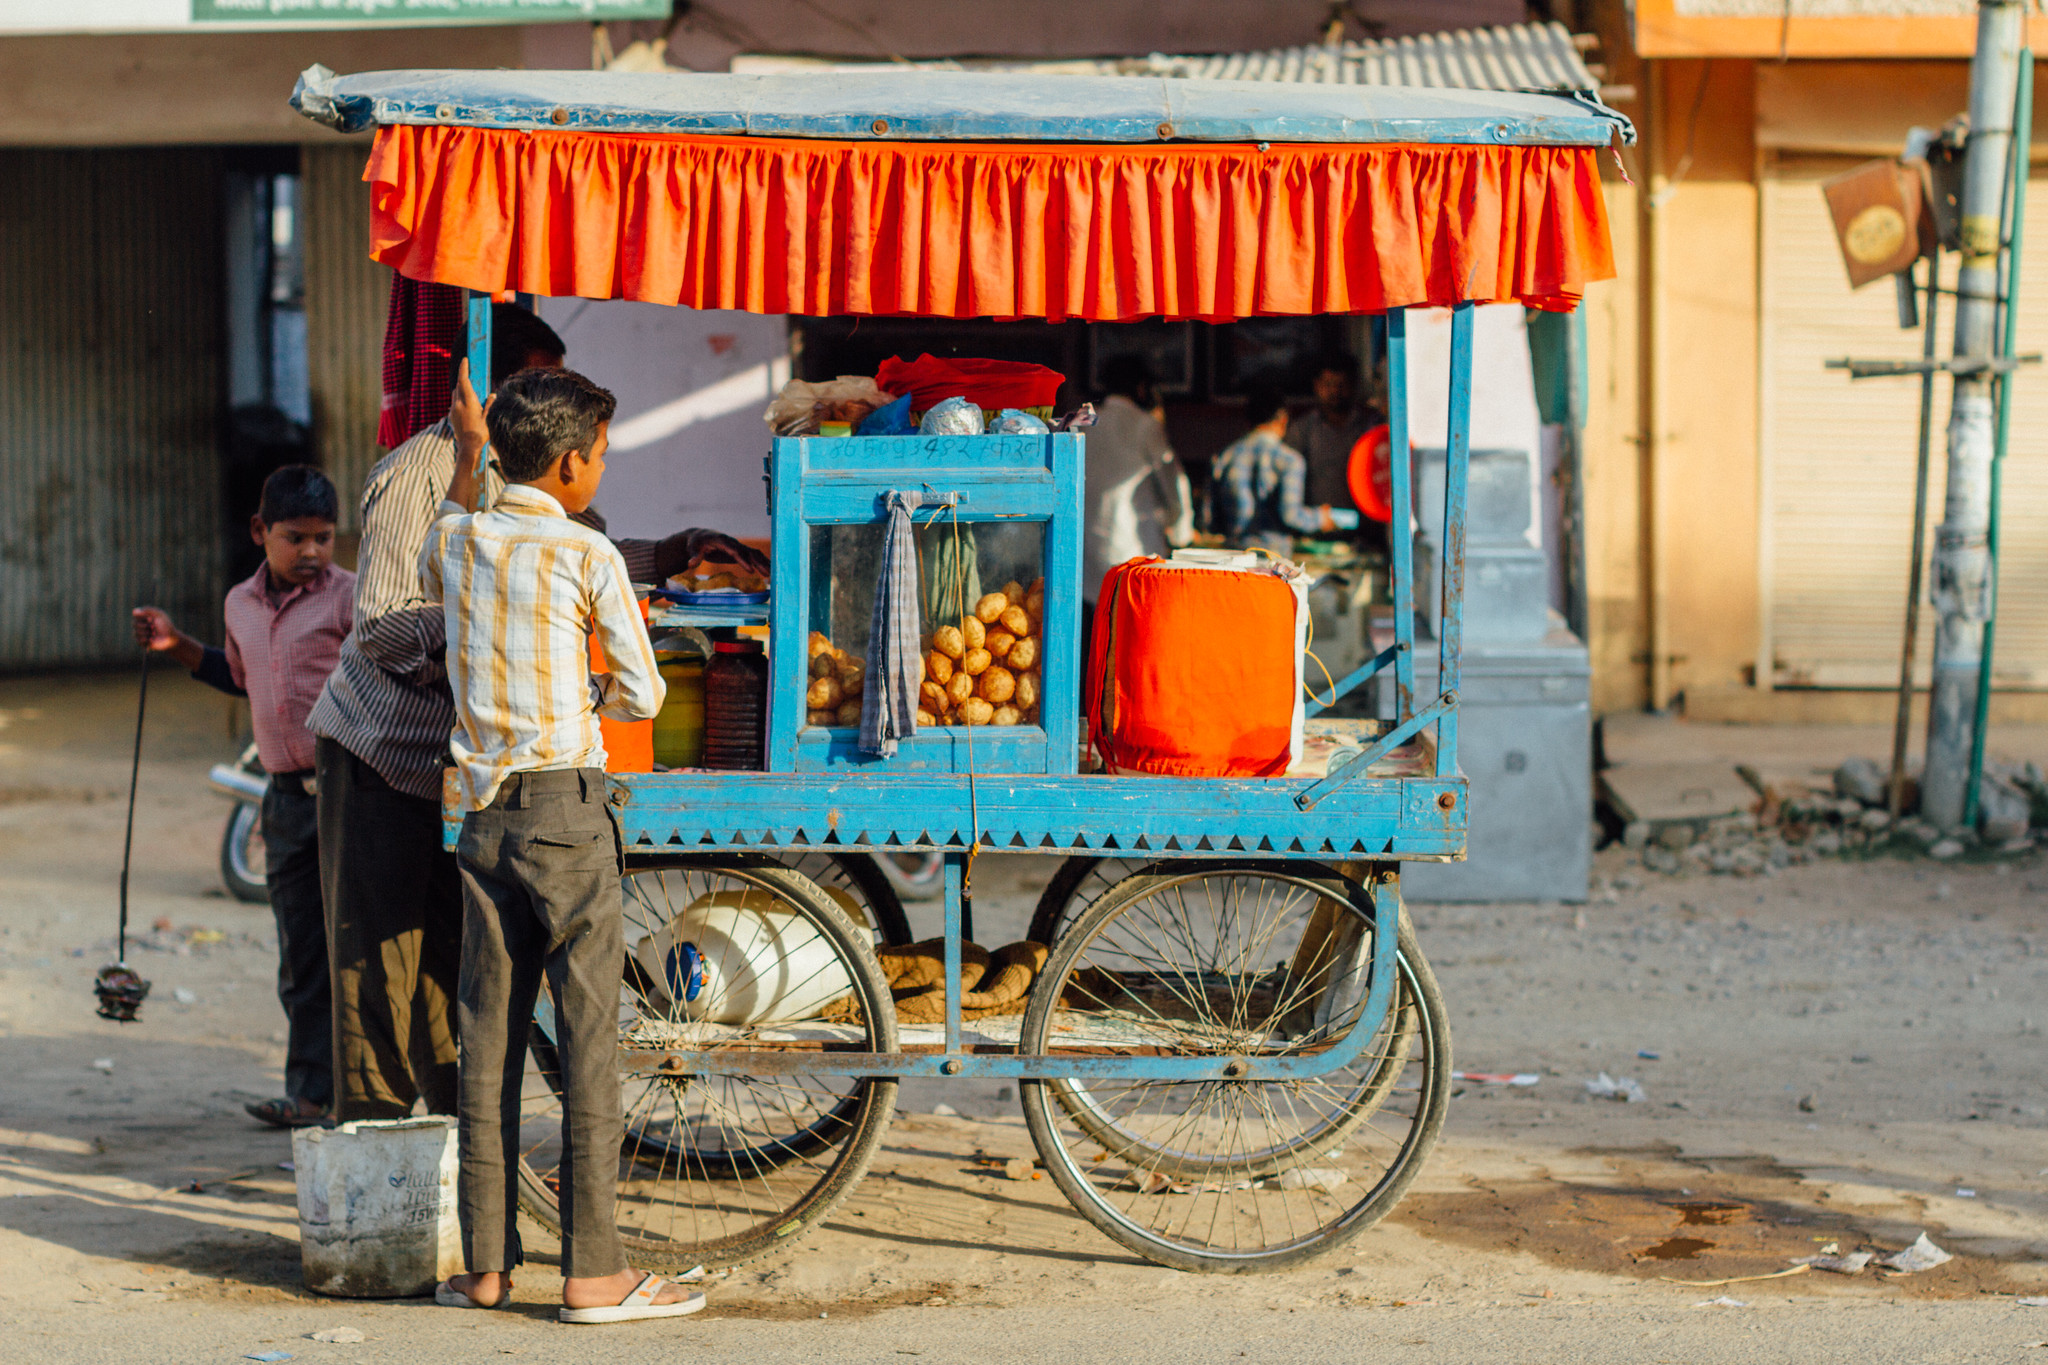 a street vendor selling paani puri on a blue cart - street vendors act